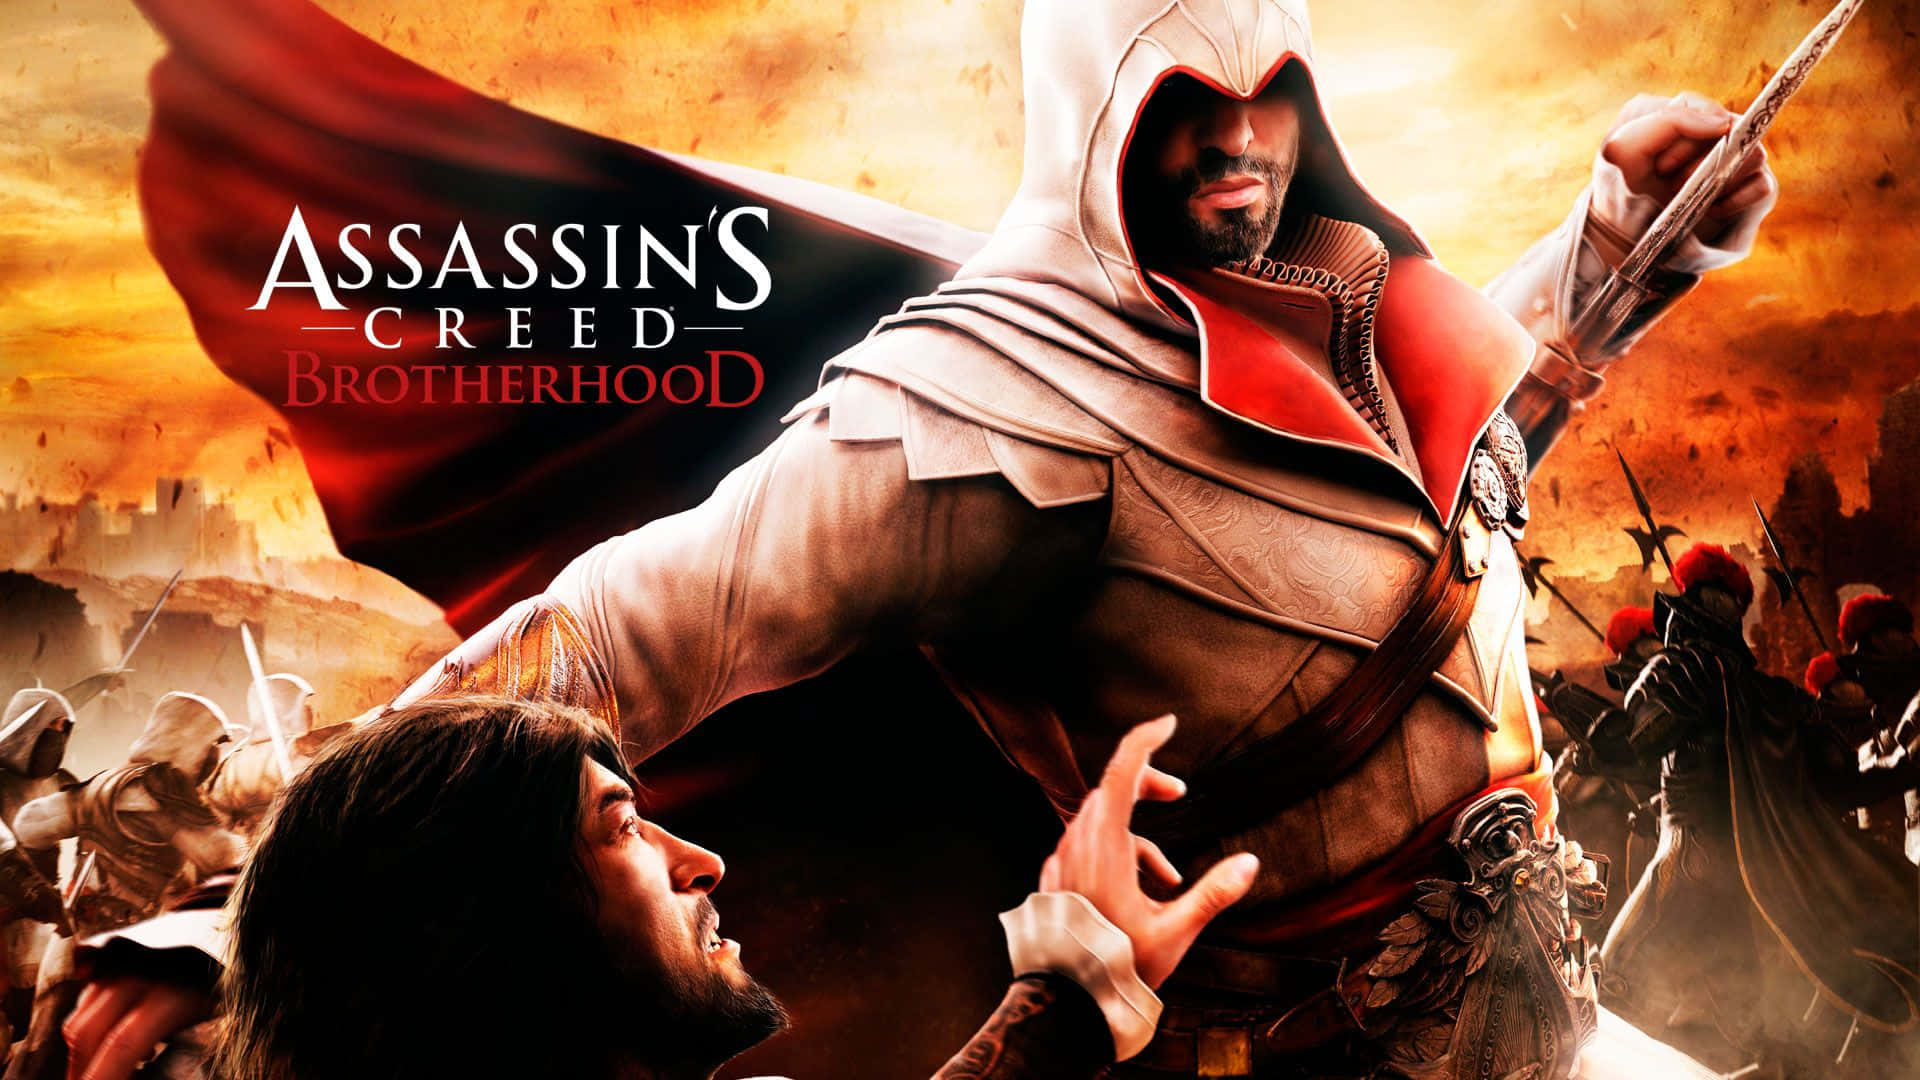 Master Assassin Ezio Auditore in Assassin's Creed Brotherhood Wallpaper